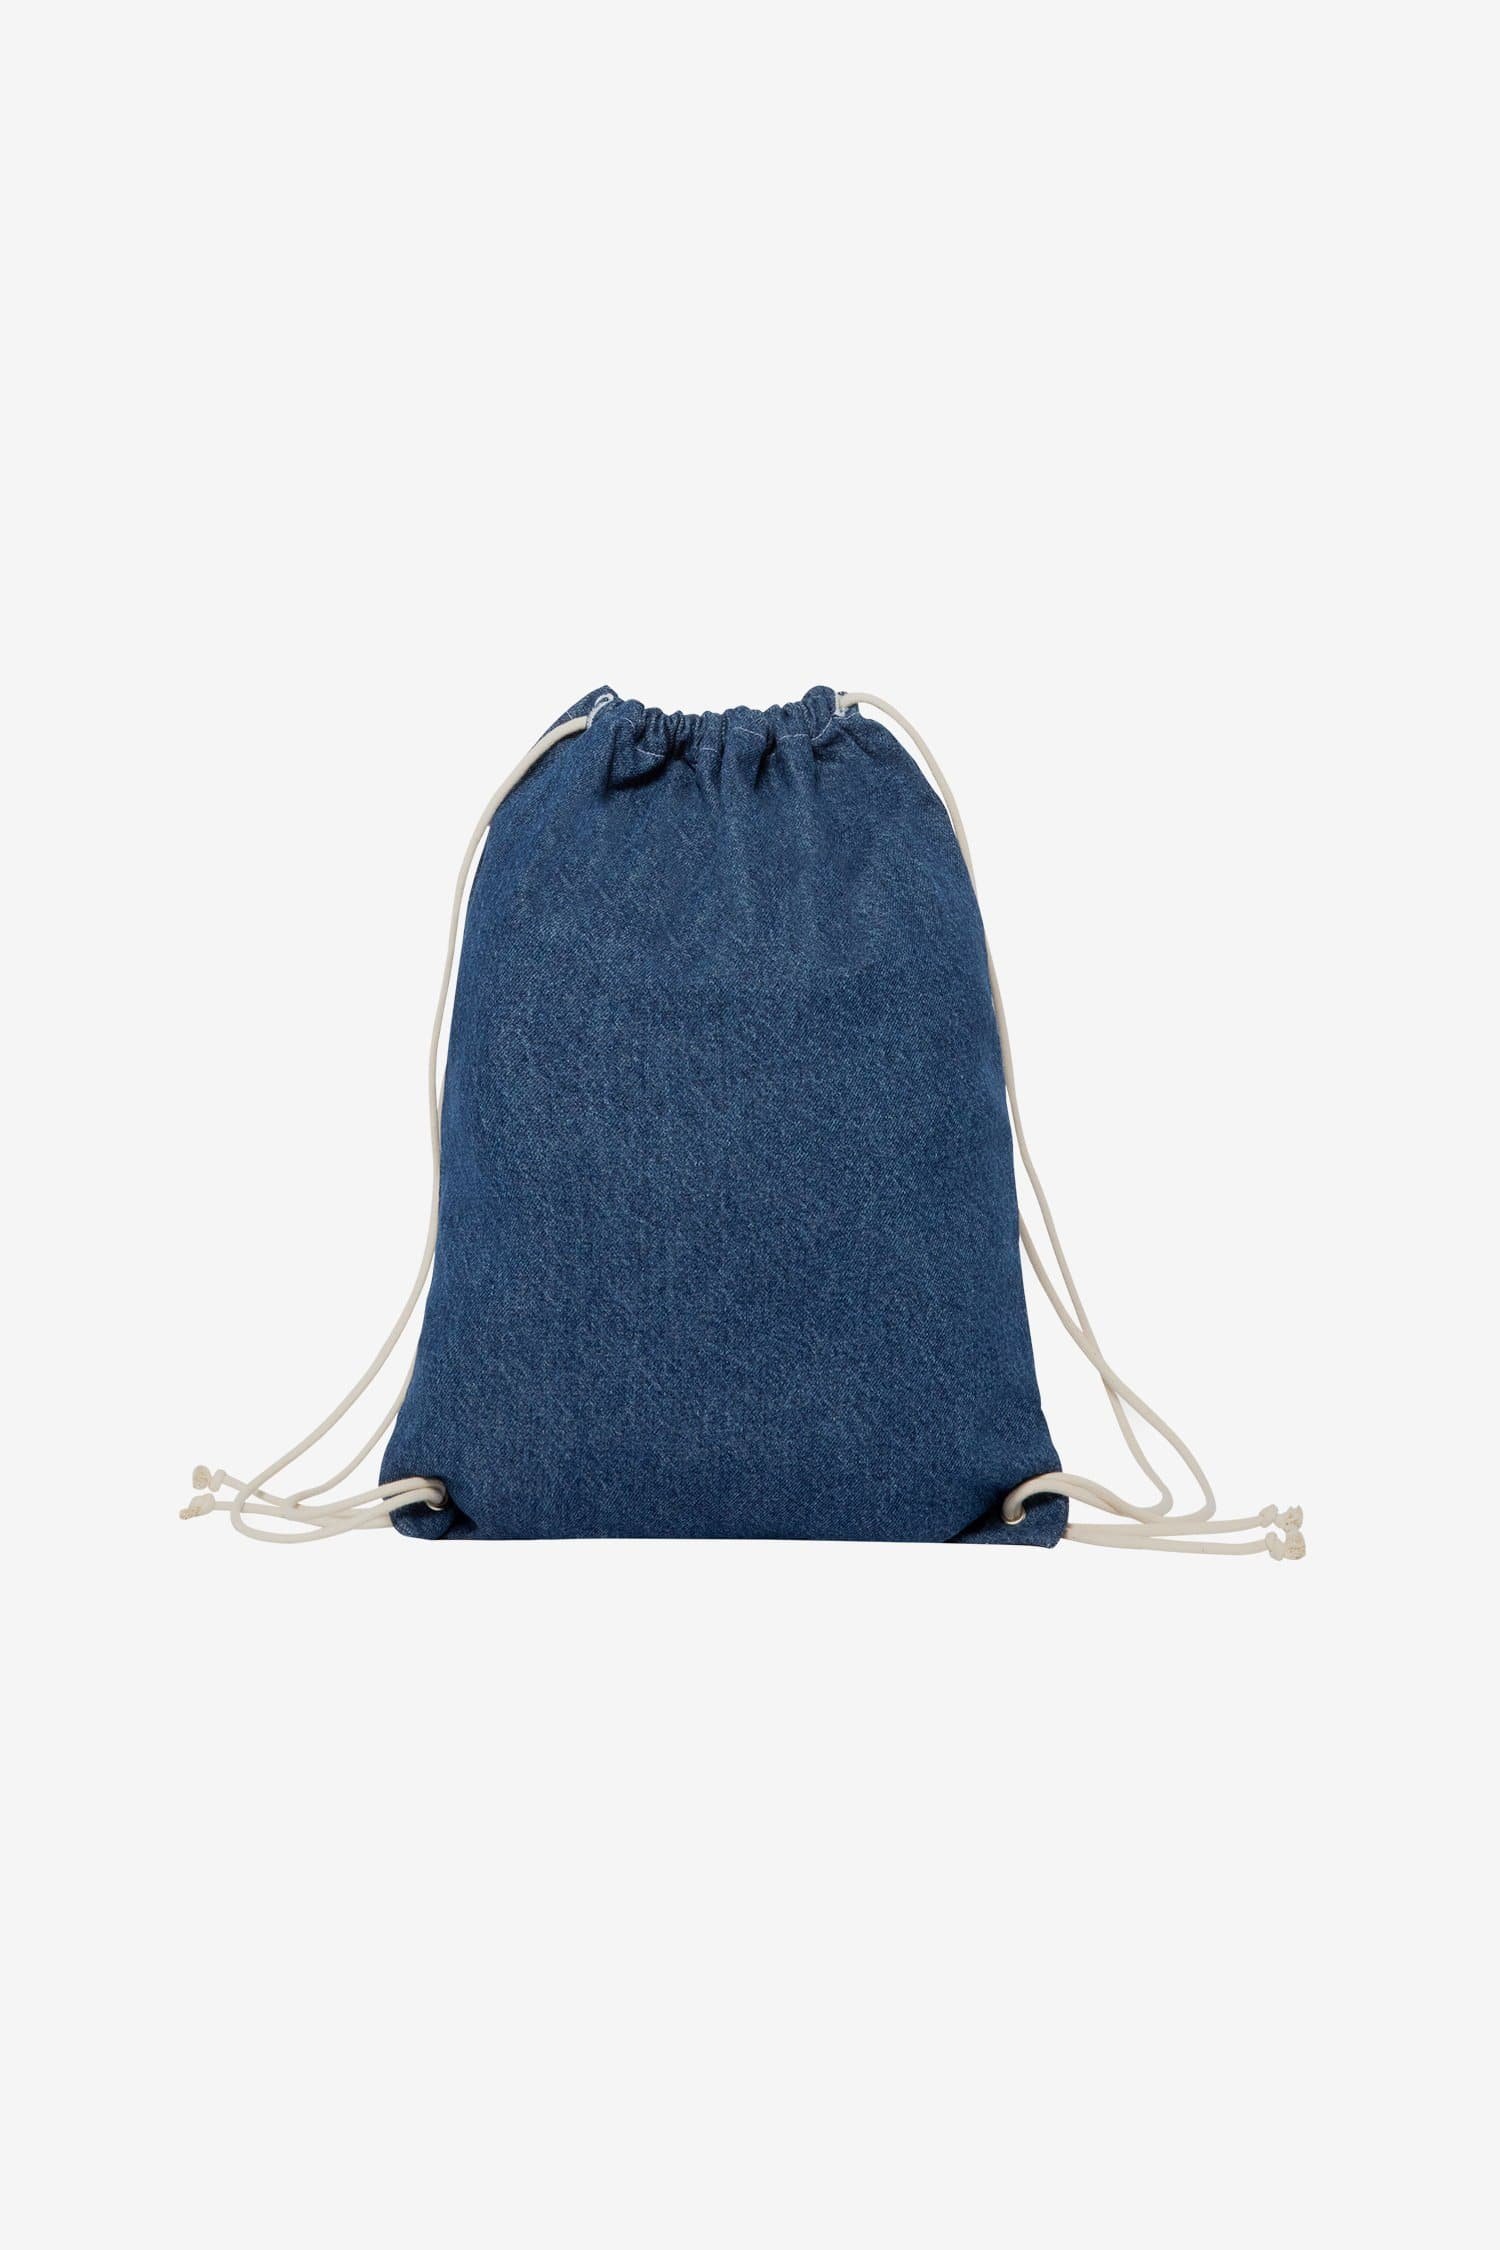 WD09 - Denim Drawstring Backpack - Dark Wash